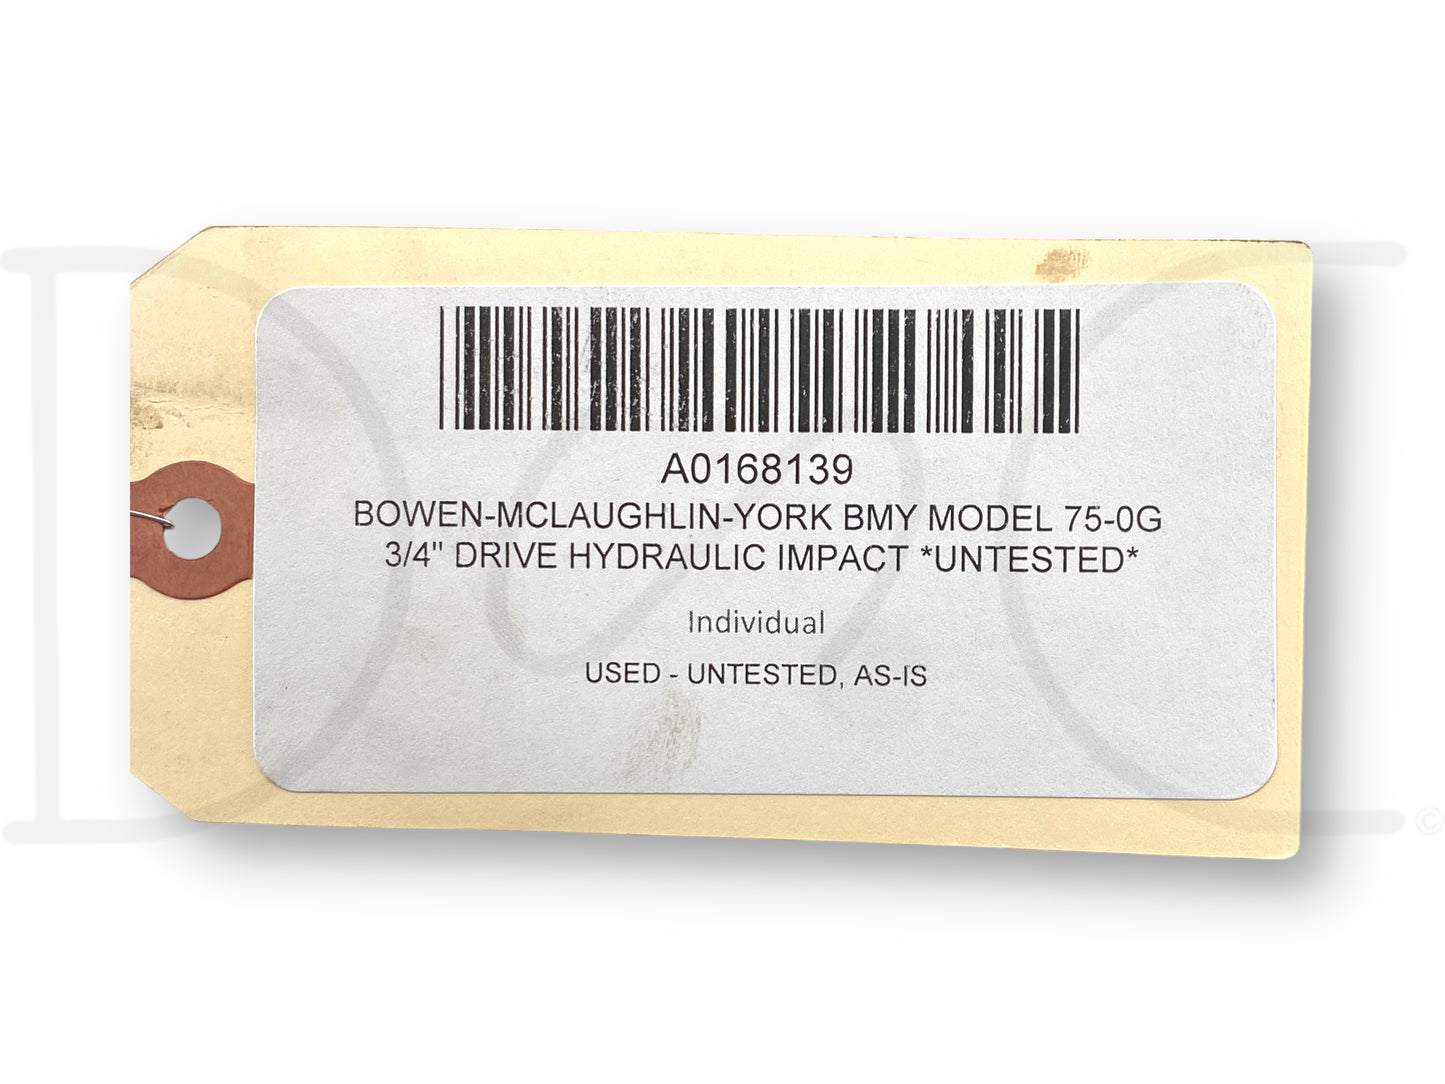 Bowen-Mclaughlin-York Bmy Model 75-0G 3/4" Drive Hydraulic Impact *Untested*